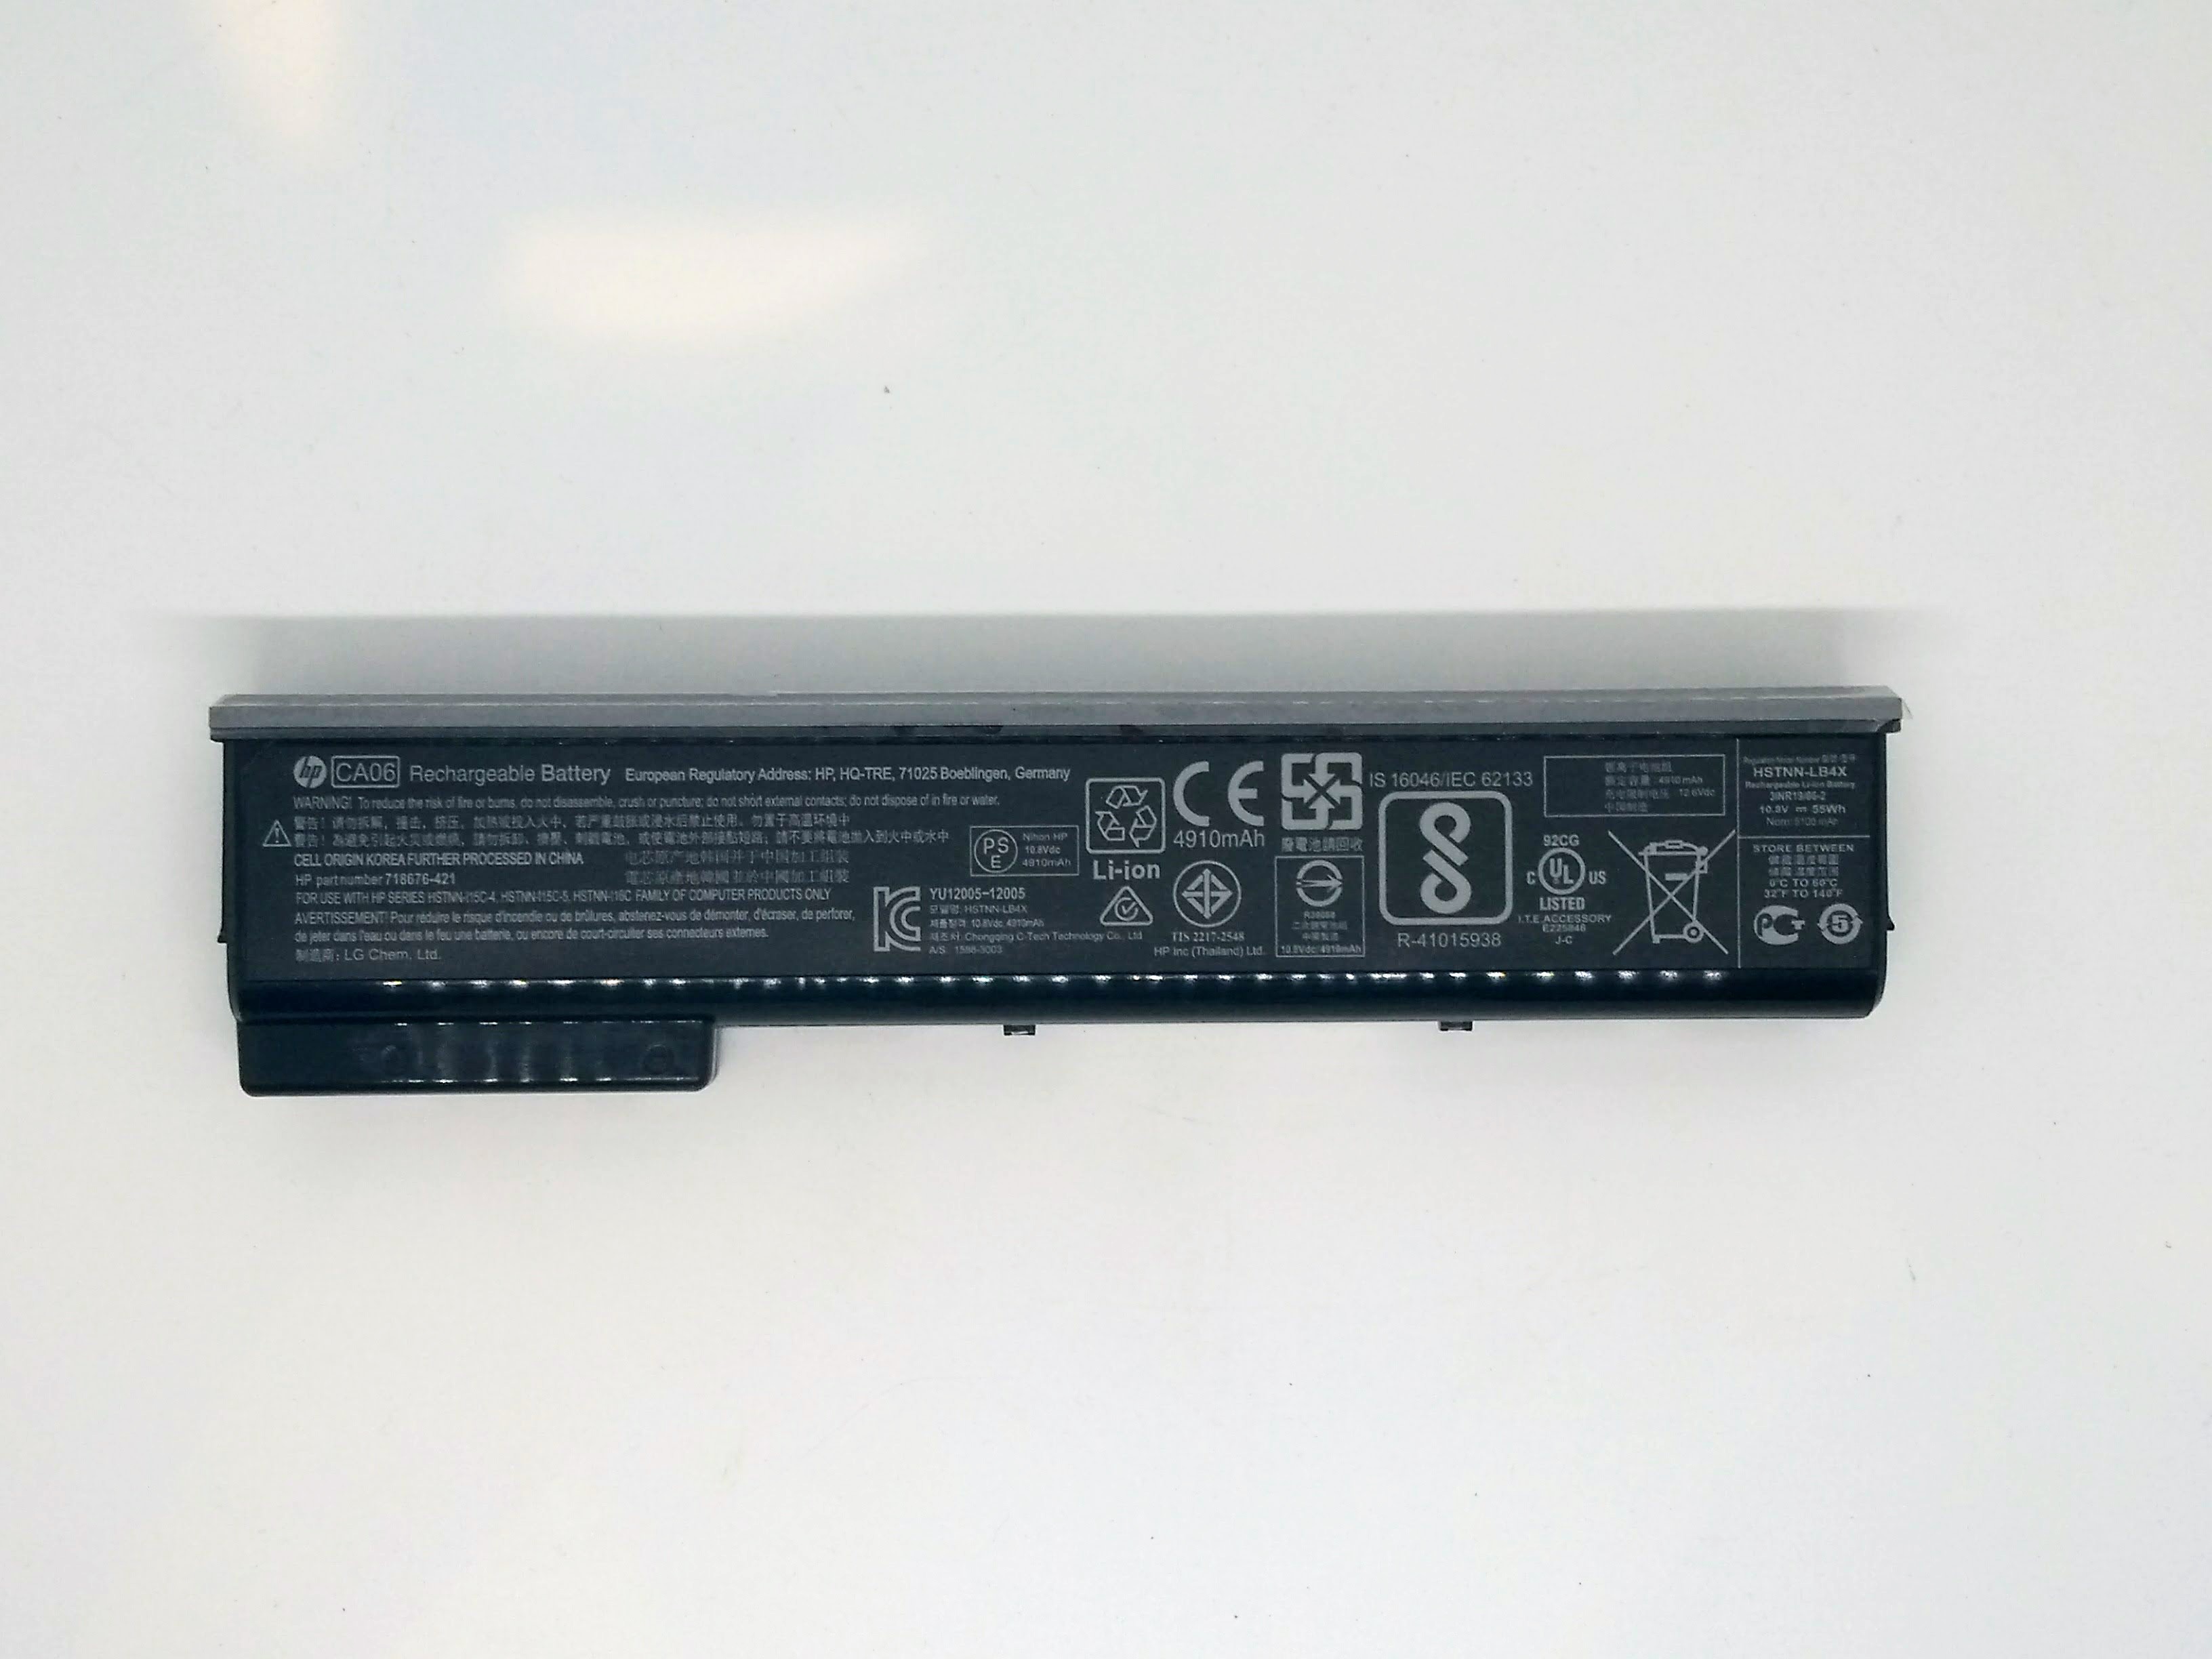 HP ProBook 645 G1 Laptop (T5L30PA) Battery 718755-001